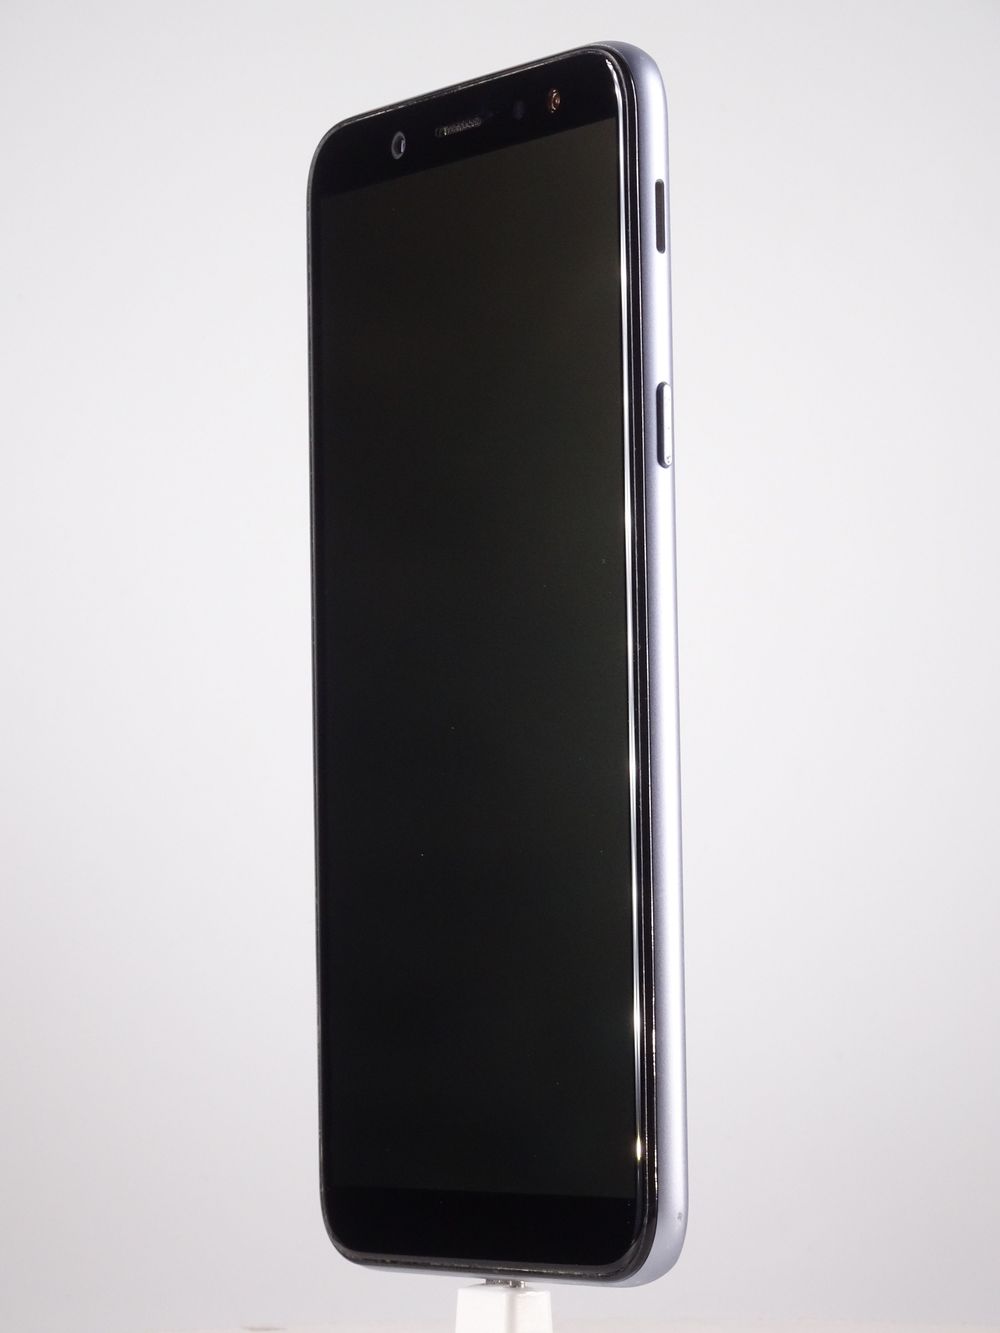 Telefon mobil Samsung Galaxy A6 (2018), Lavender, 64 GB,  Excelent